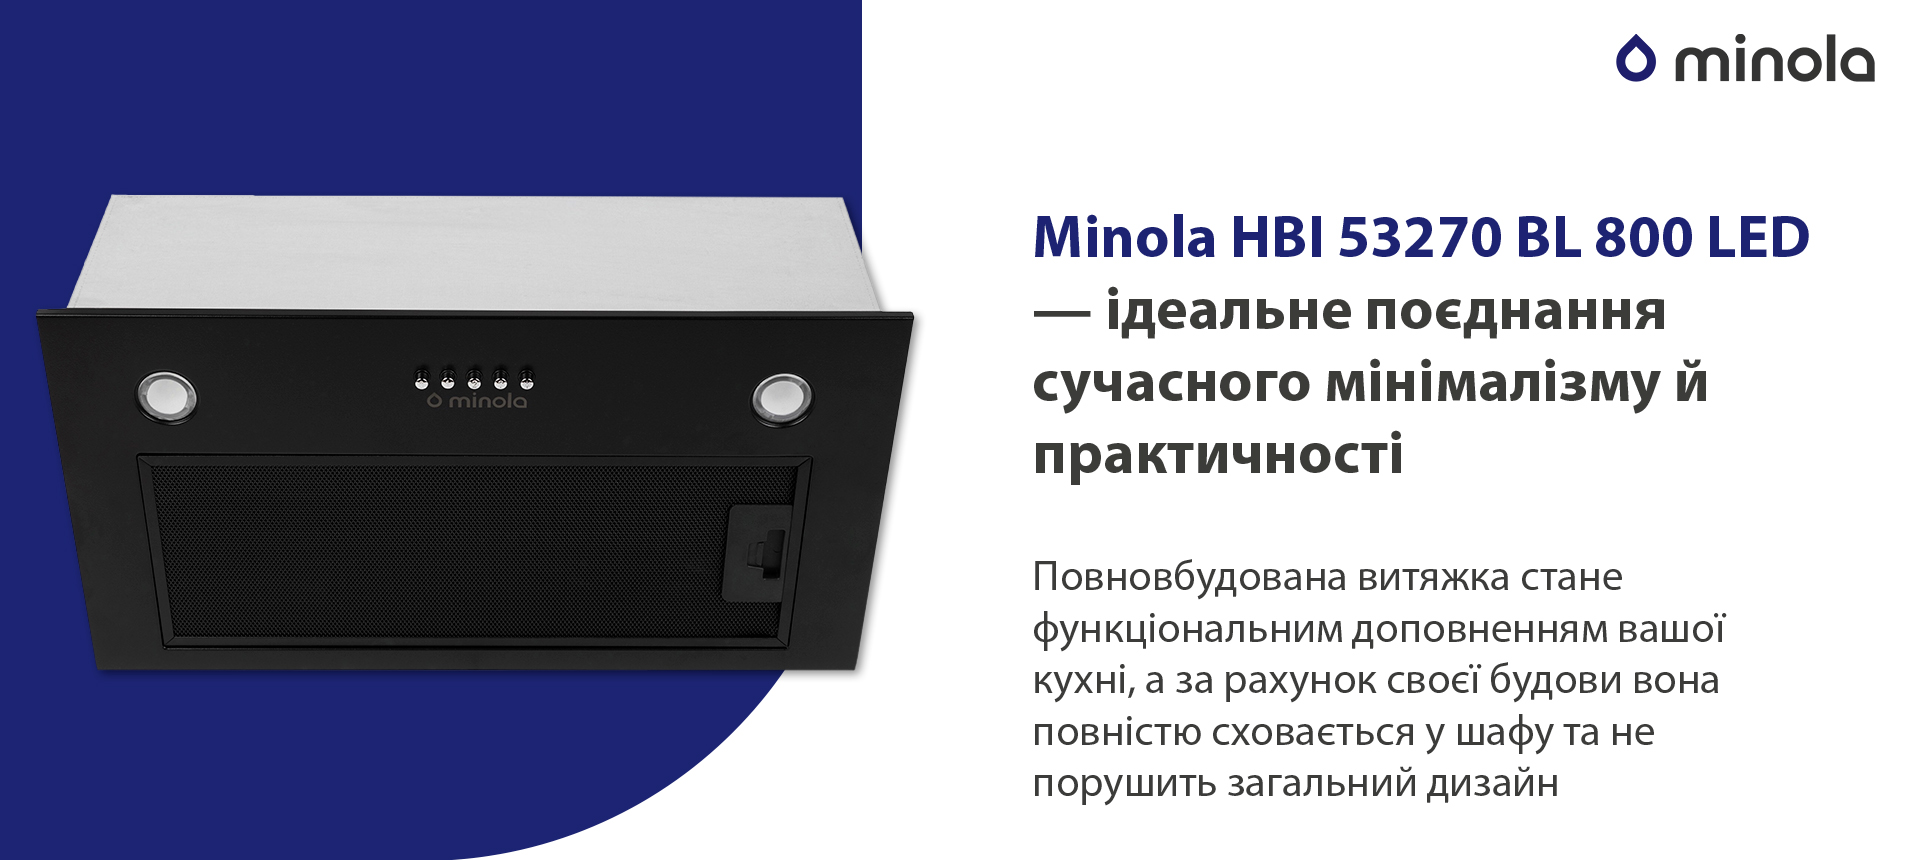 Minola HBI 53270 BL 800 LED в магазині в Києві - фото 10